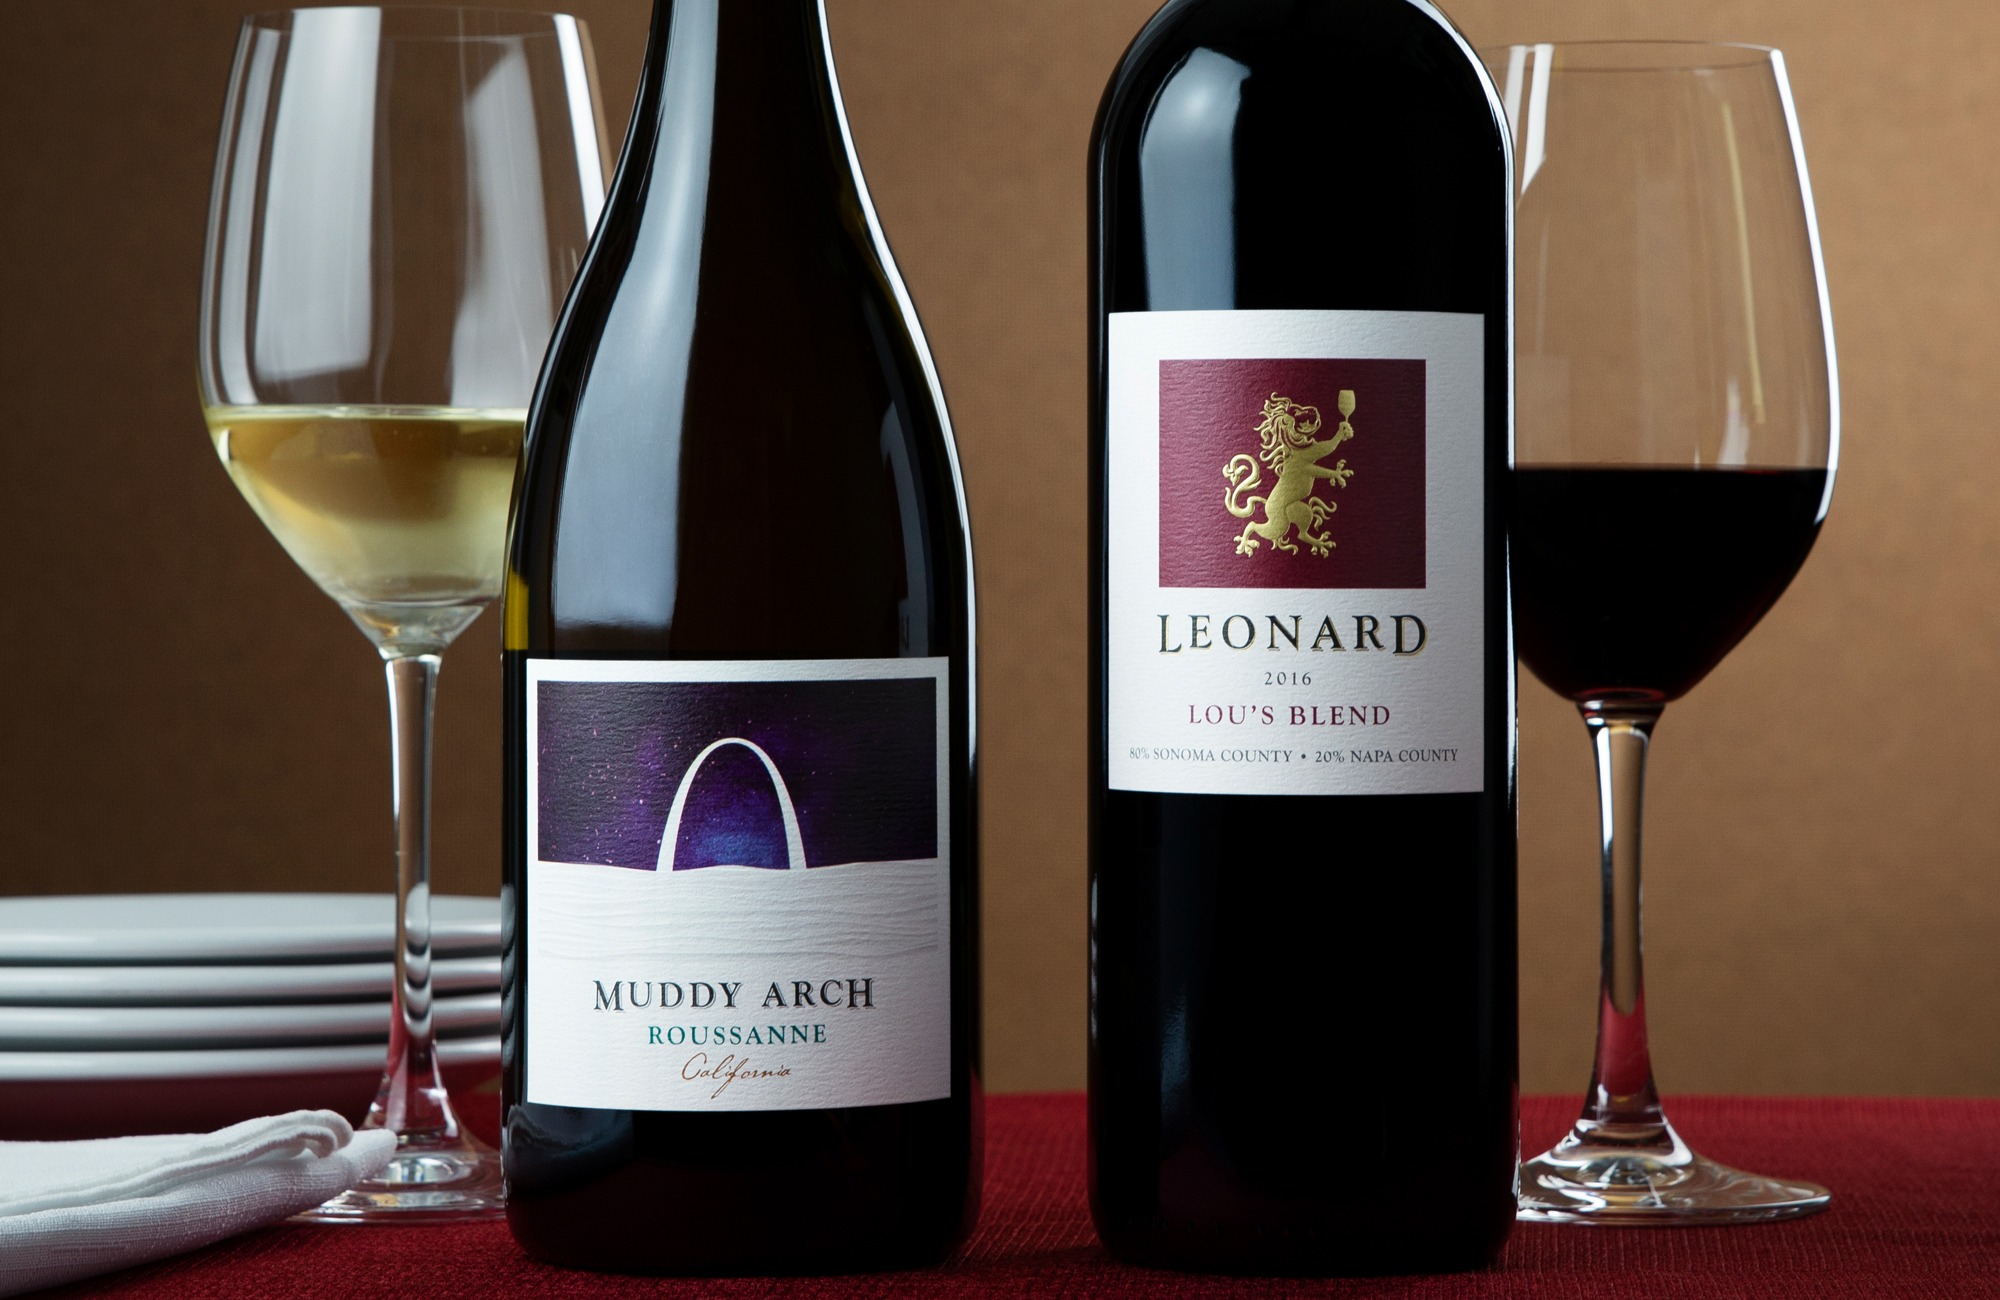 Leonard Wine Company: Creating an American Wine Brand with European